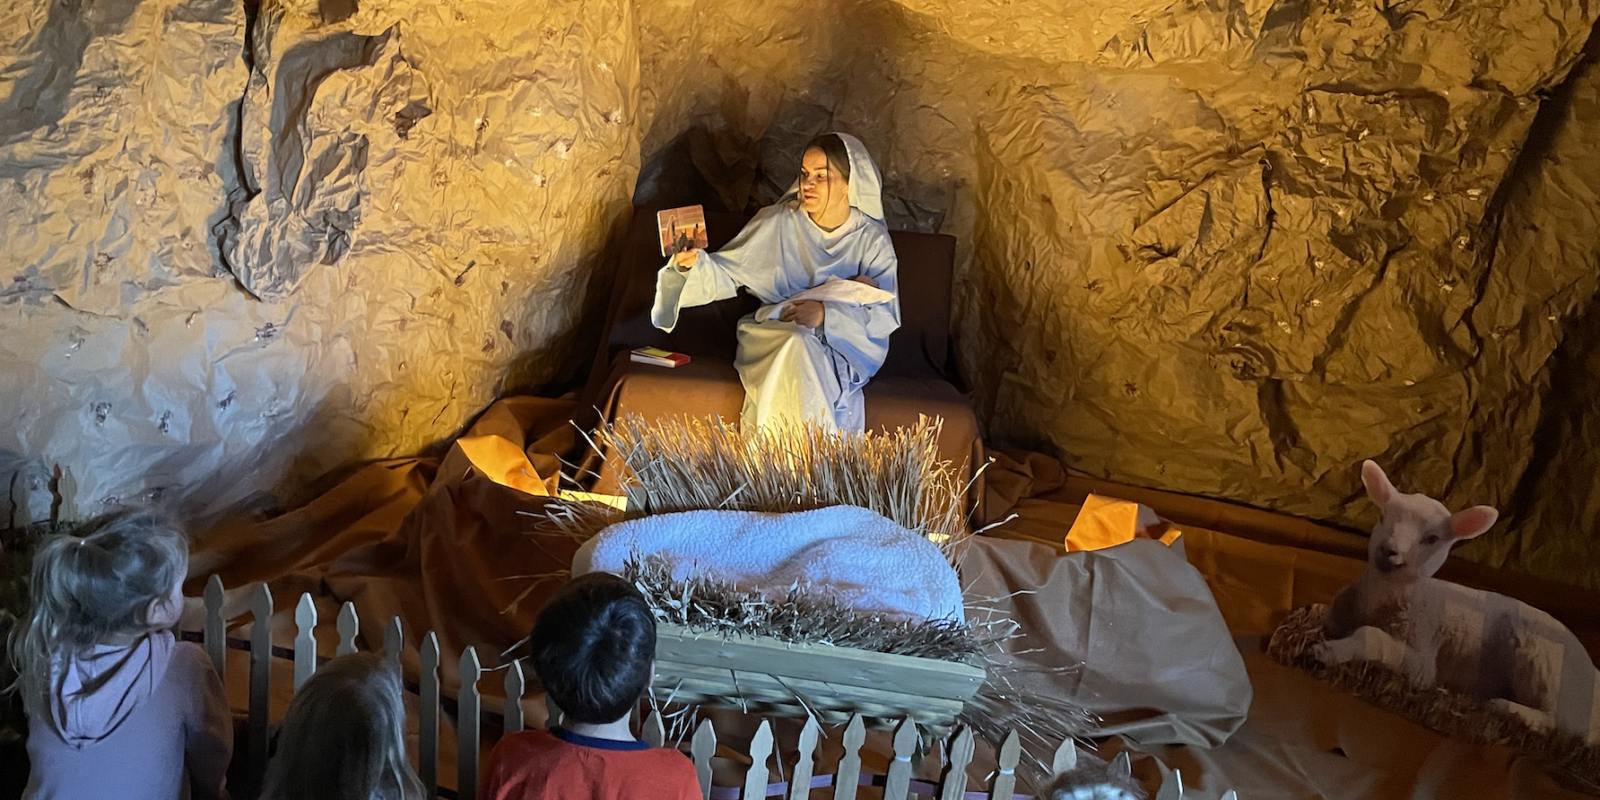 December Chapel, A Visit to Bethlehem